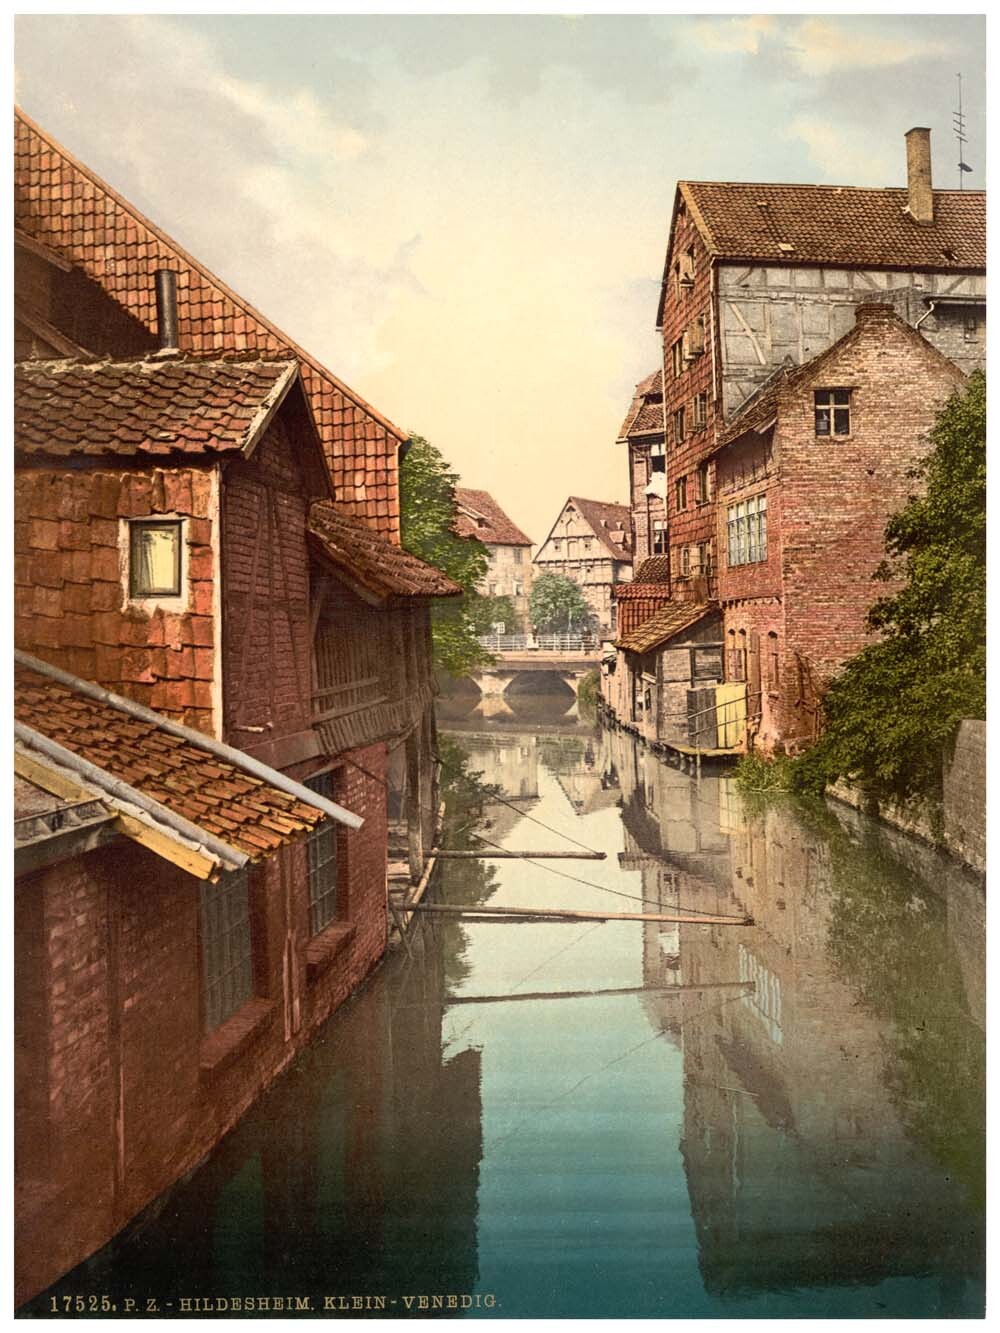 Klein-Venedig, Hildesheim, Hanover, Germany 0400-4236